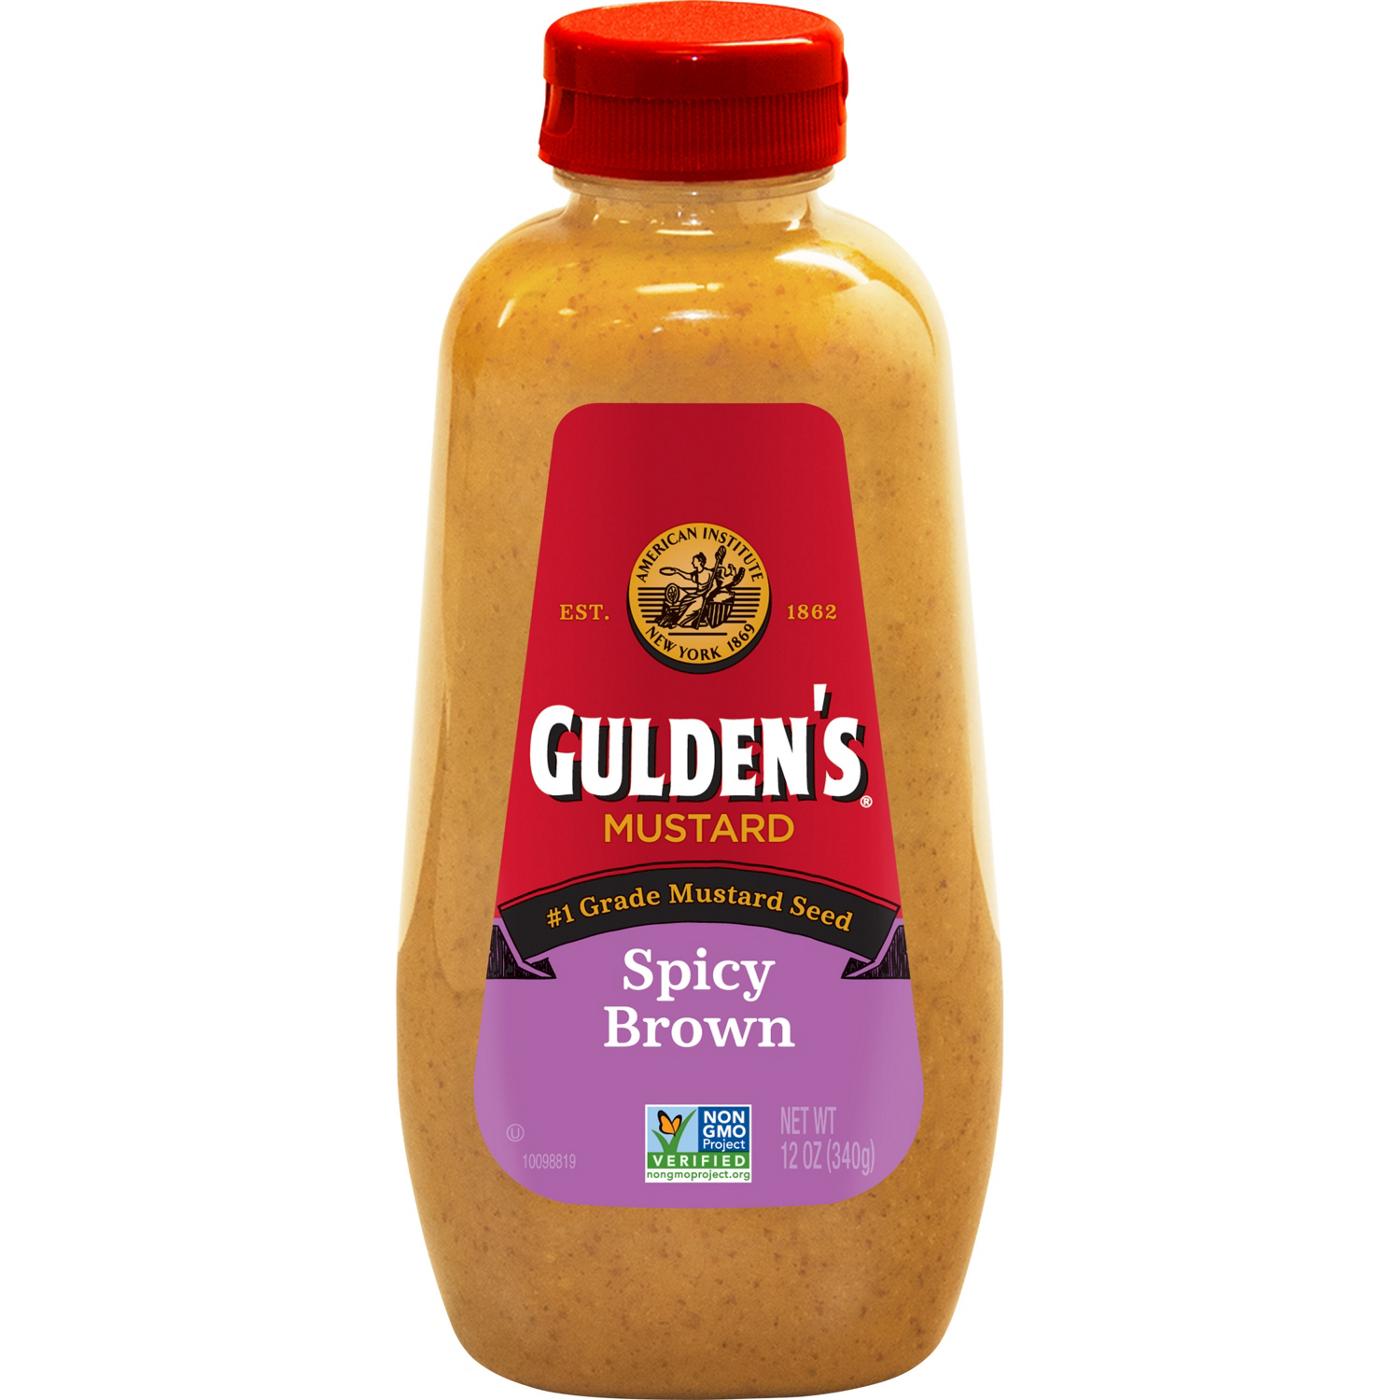 Gulden's Spicy Brown Mustard; image 1 of 6